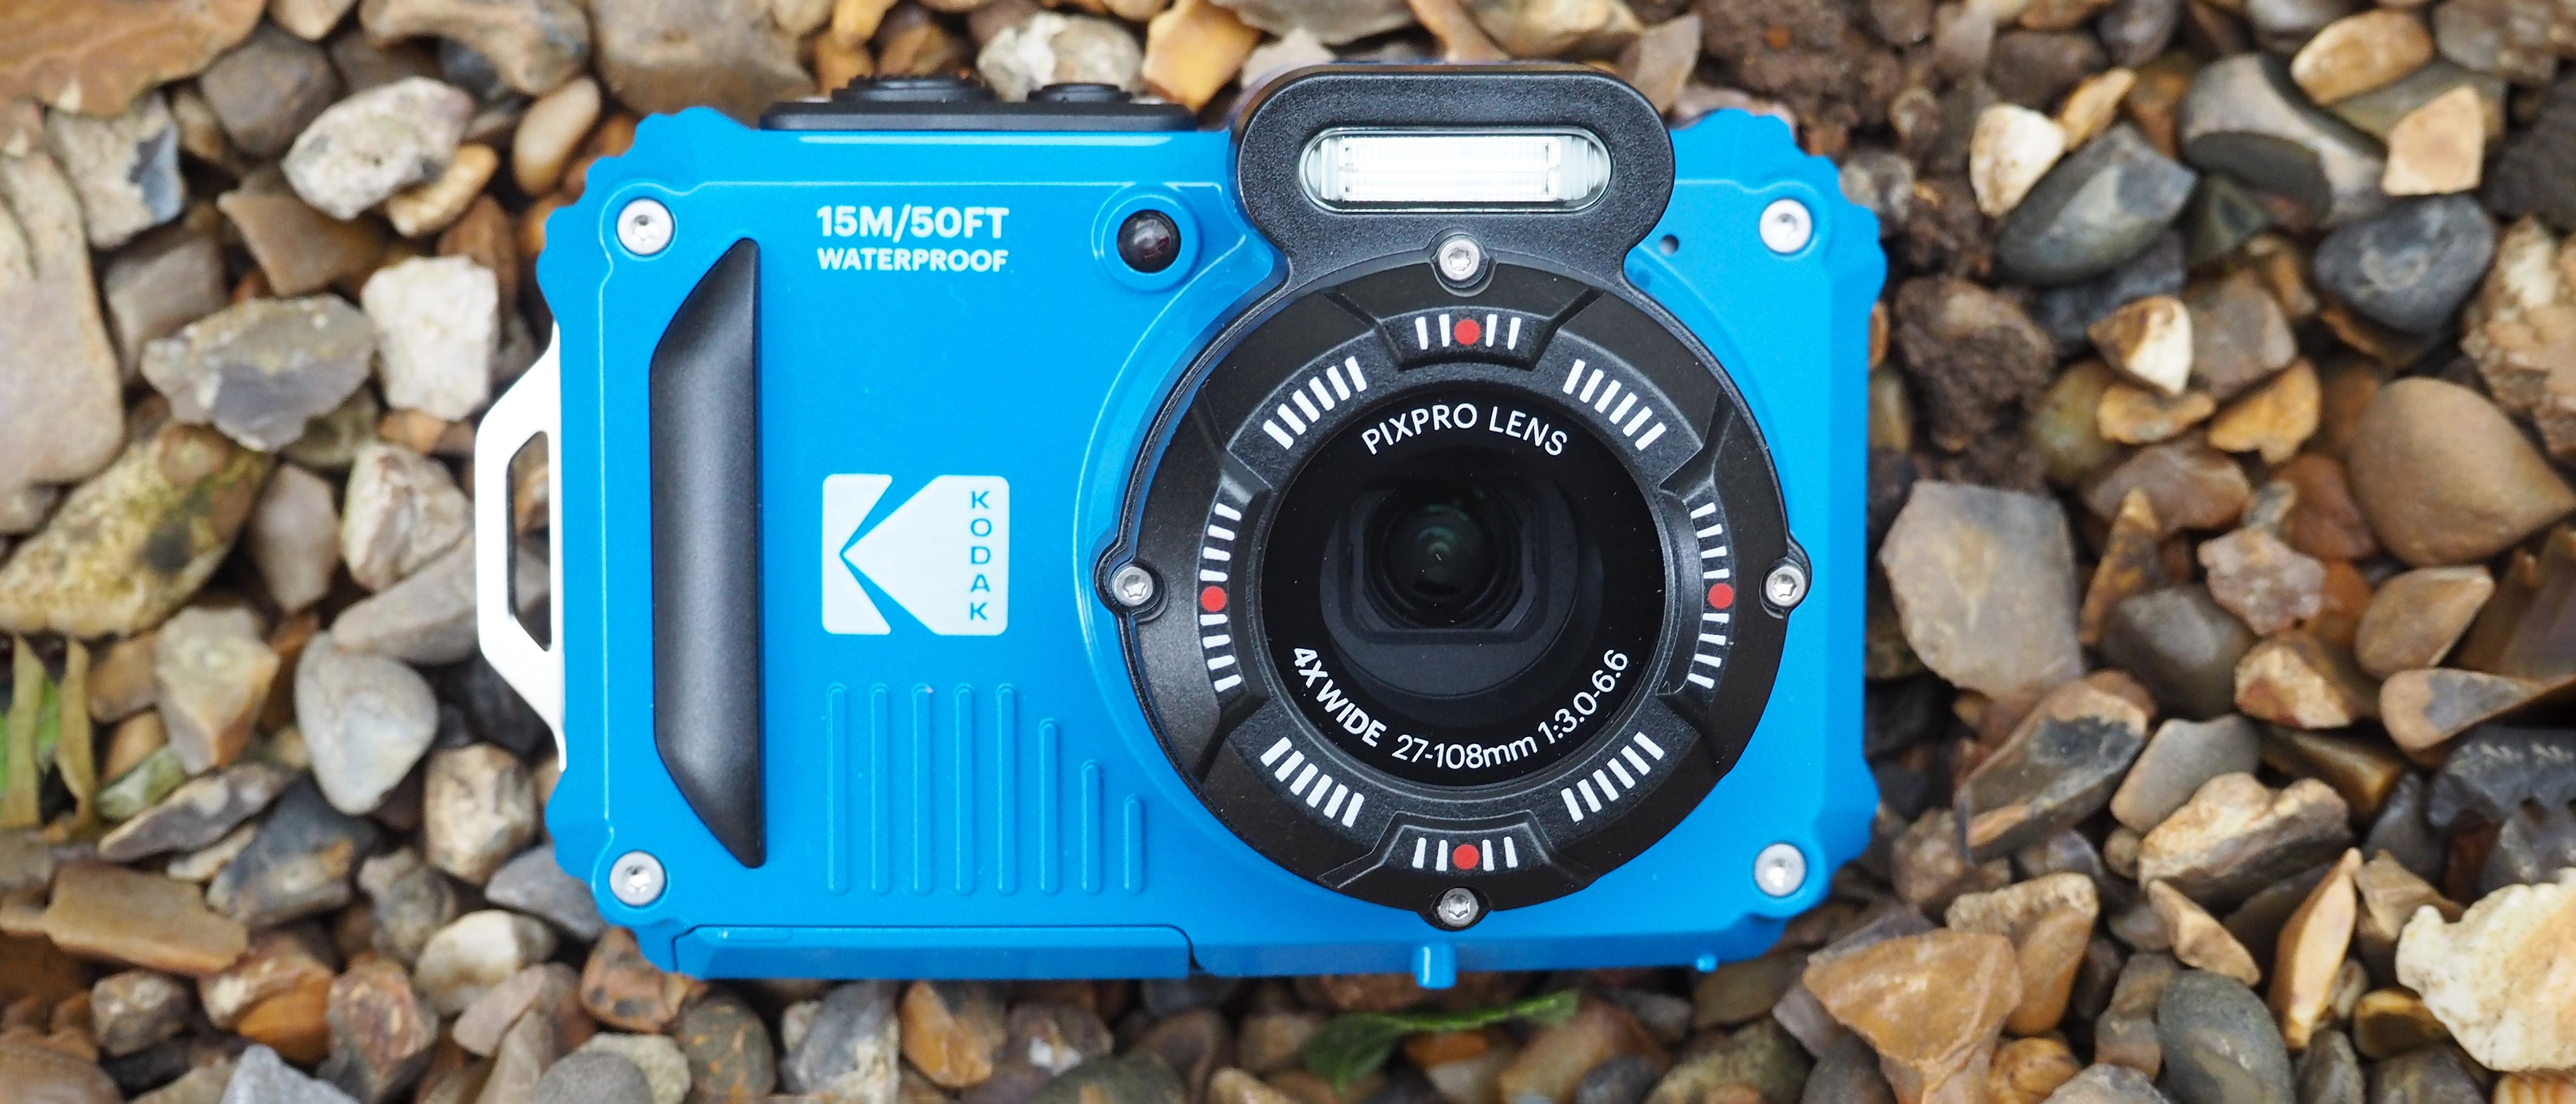 Kodak PIXPRO FZ55 Digital Camera, Blue Open Box - Tested